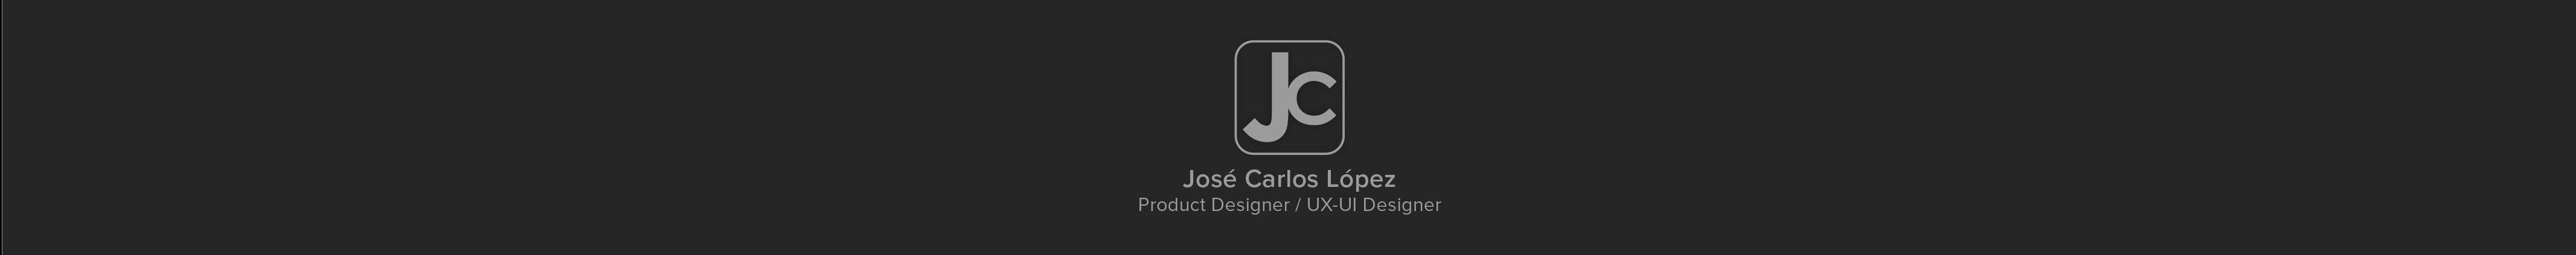 Jose Carlos Lopez's profile banner